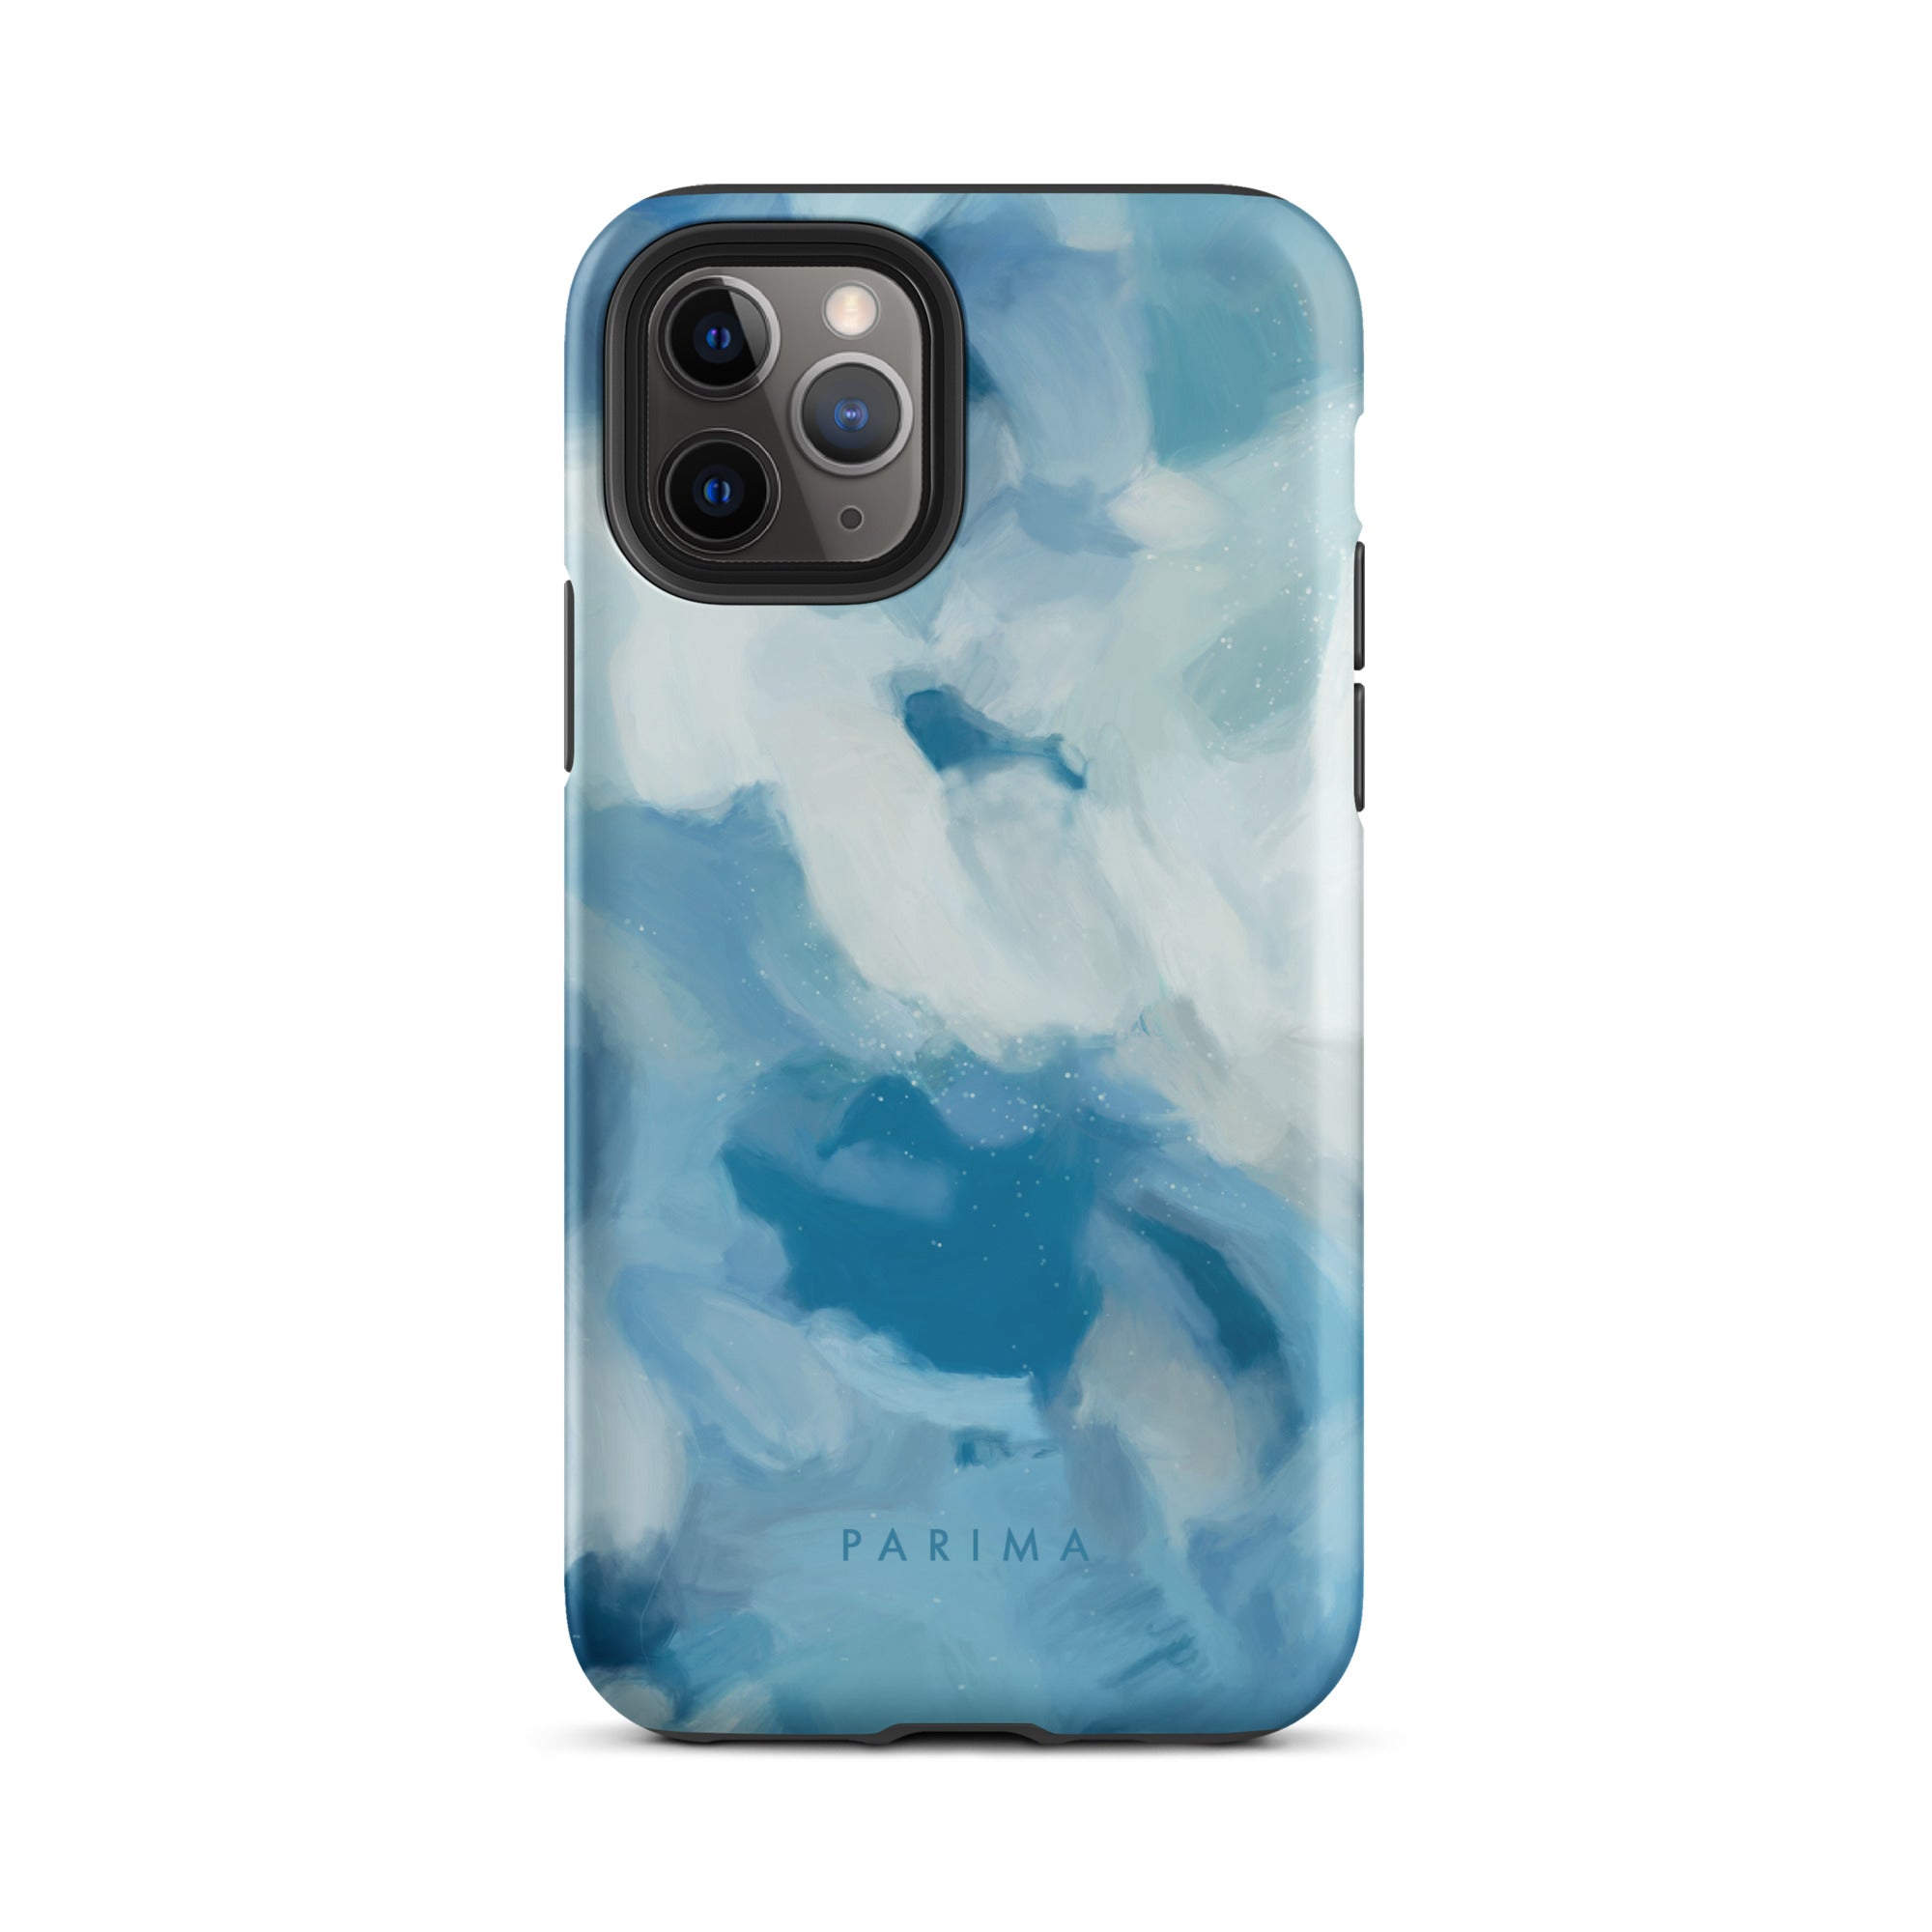 Liviana, blue abstract art - iPhone 11 Pro tough case by Parima Studio